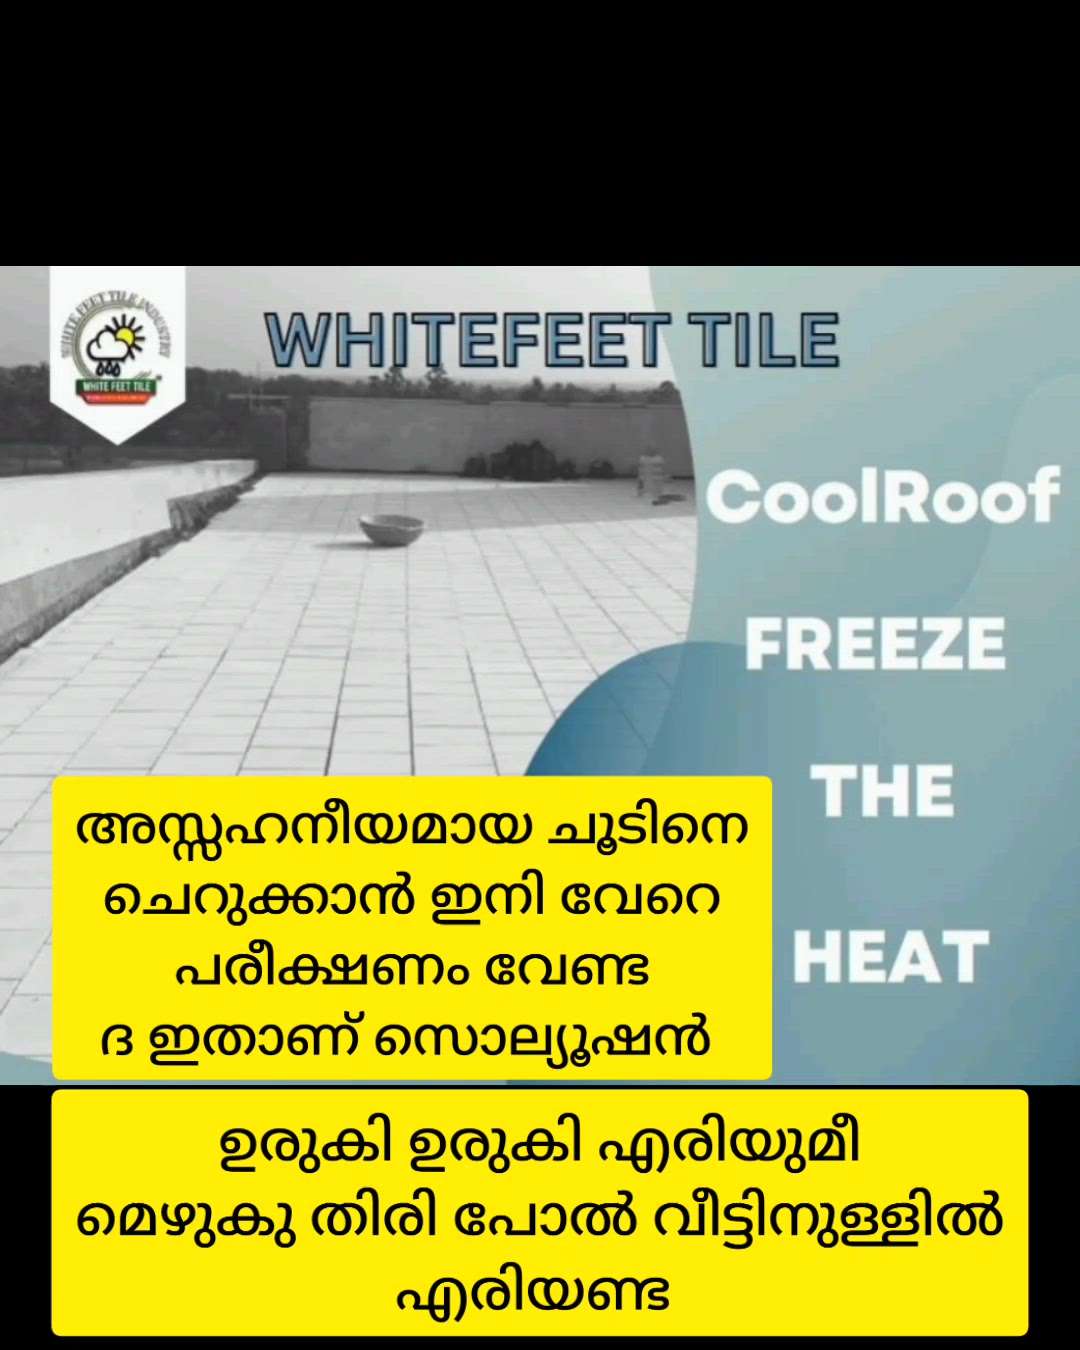 #creatorsofkolo #roofing #kerala #bestroofing
#rooftiles #cooltiles #roofingsolutions #keralaroofing #heatresistance #coolingroof